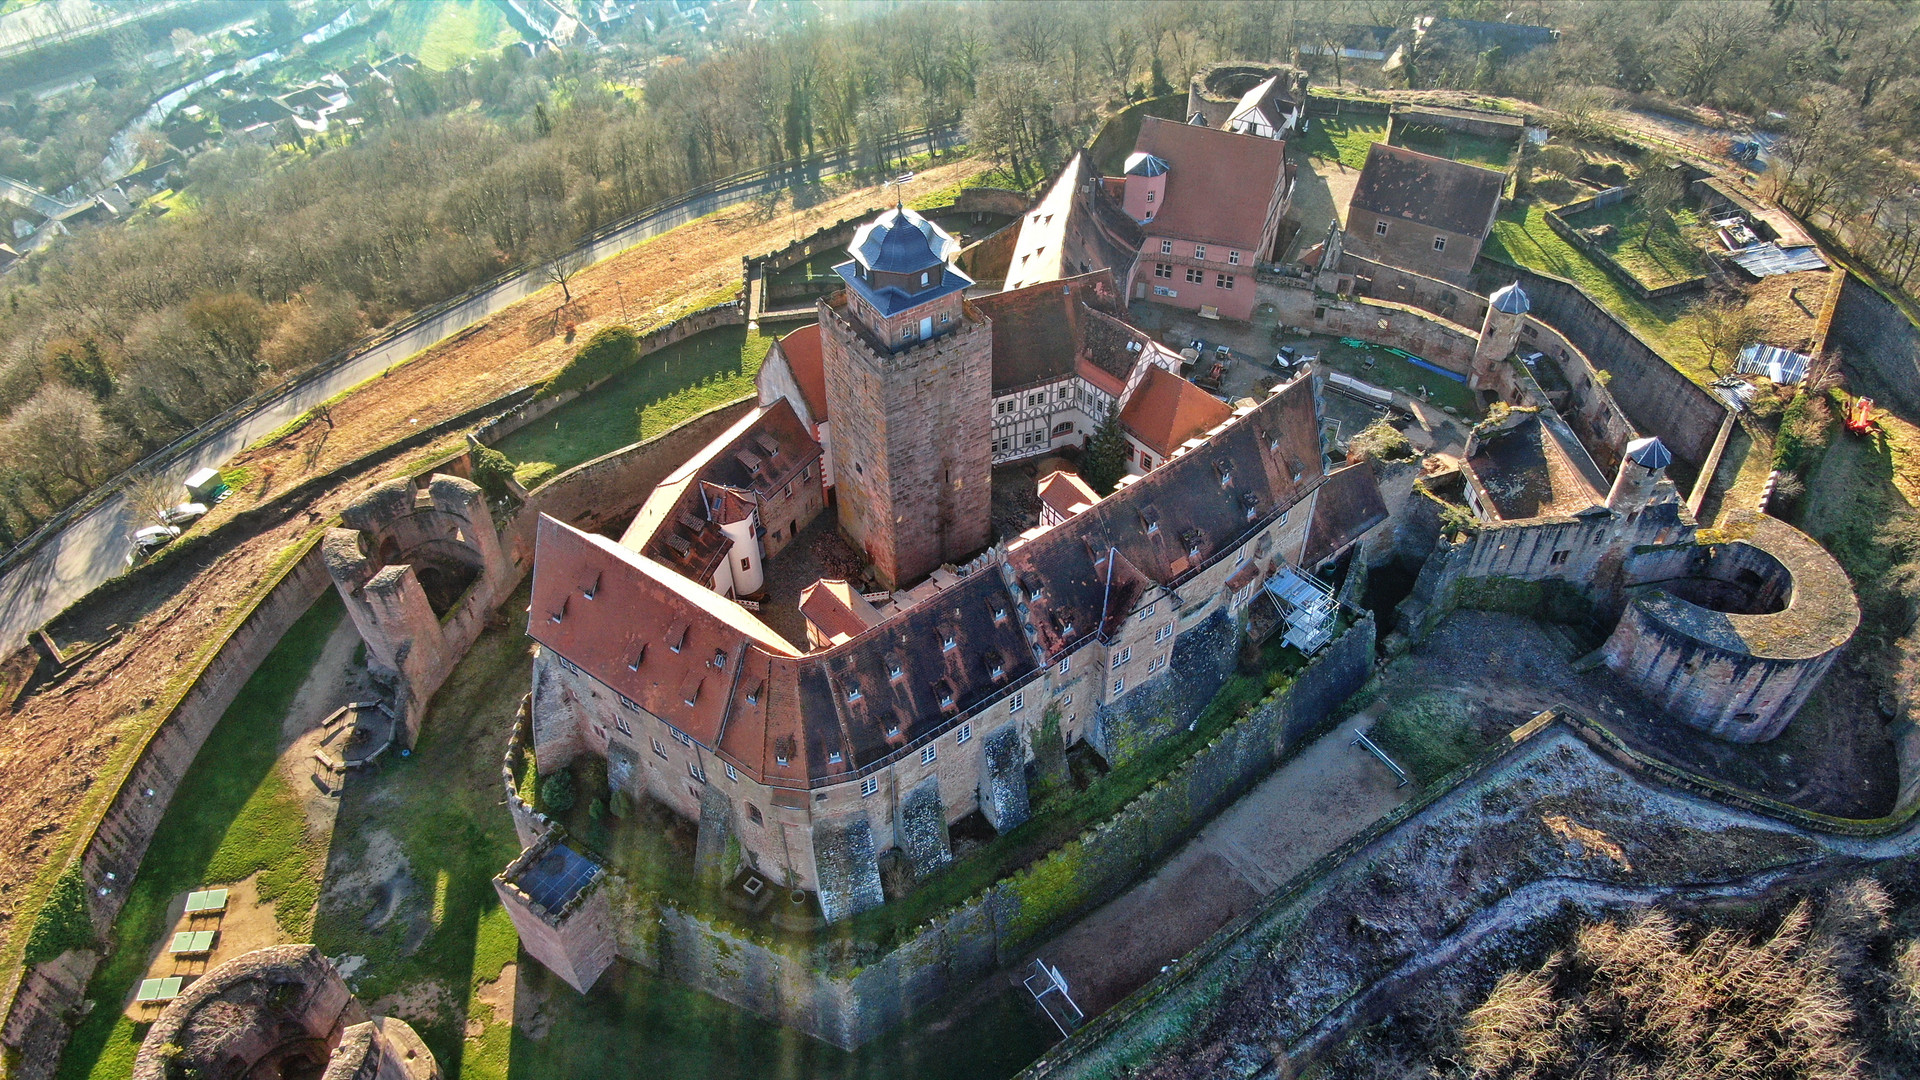 Burg Breuberg